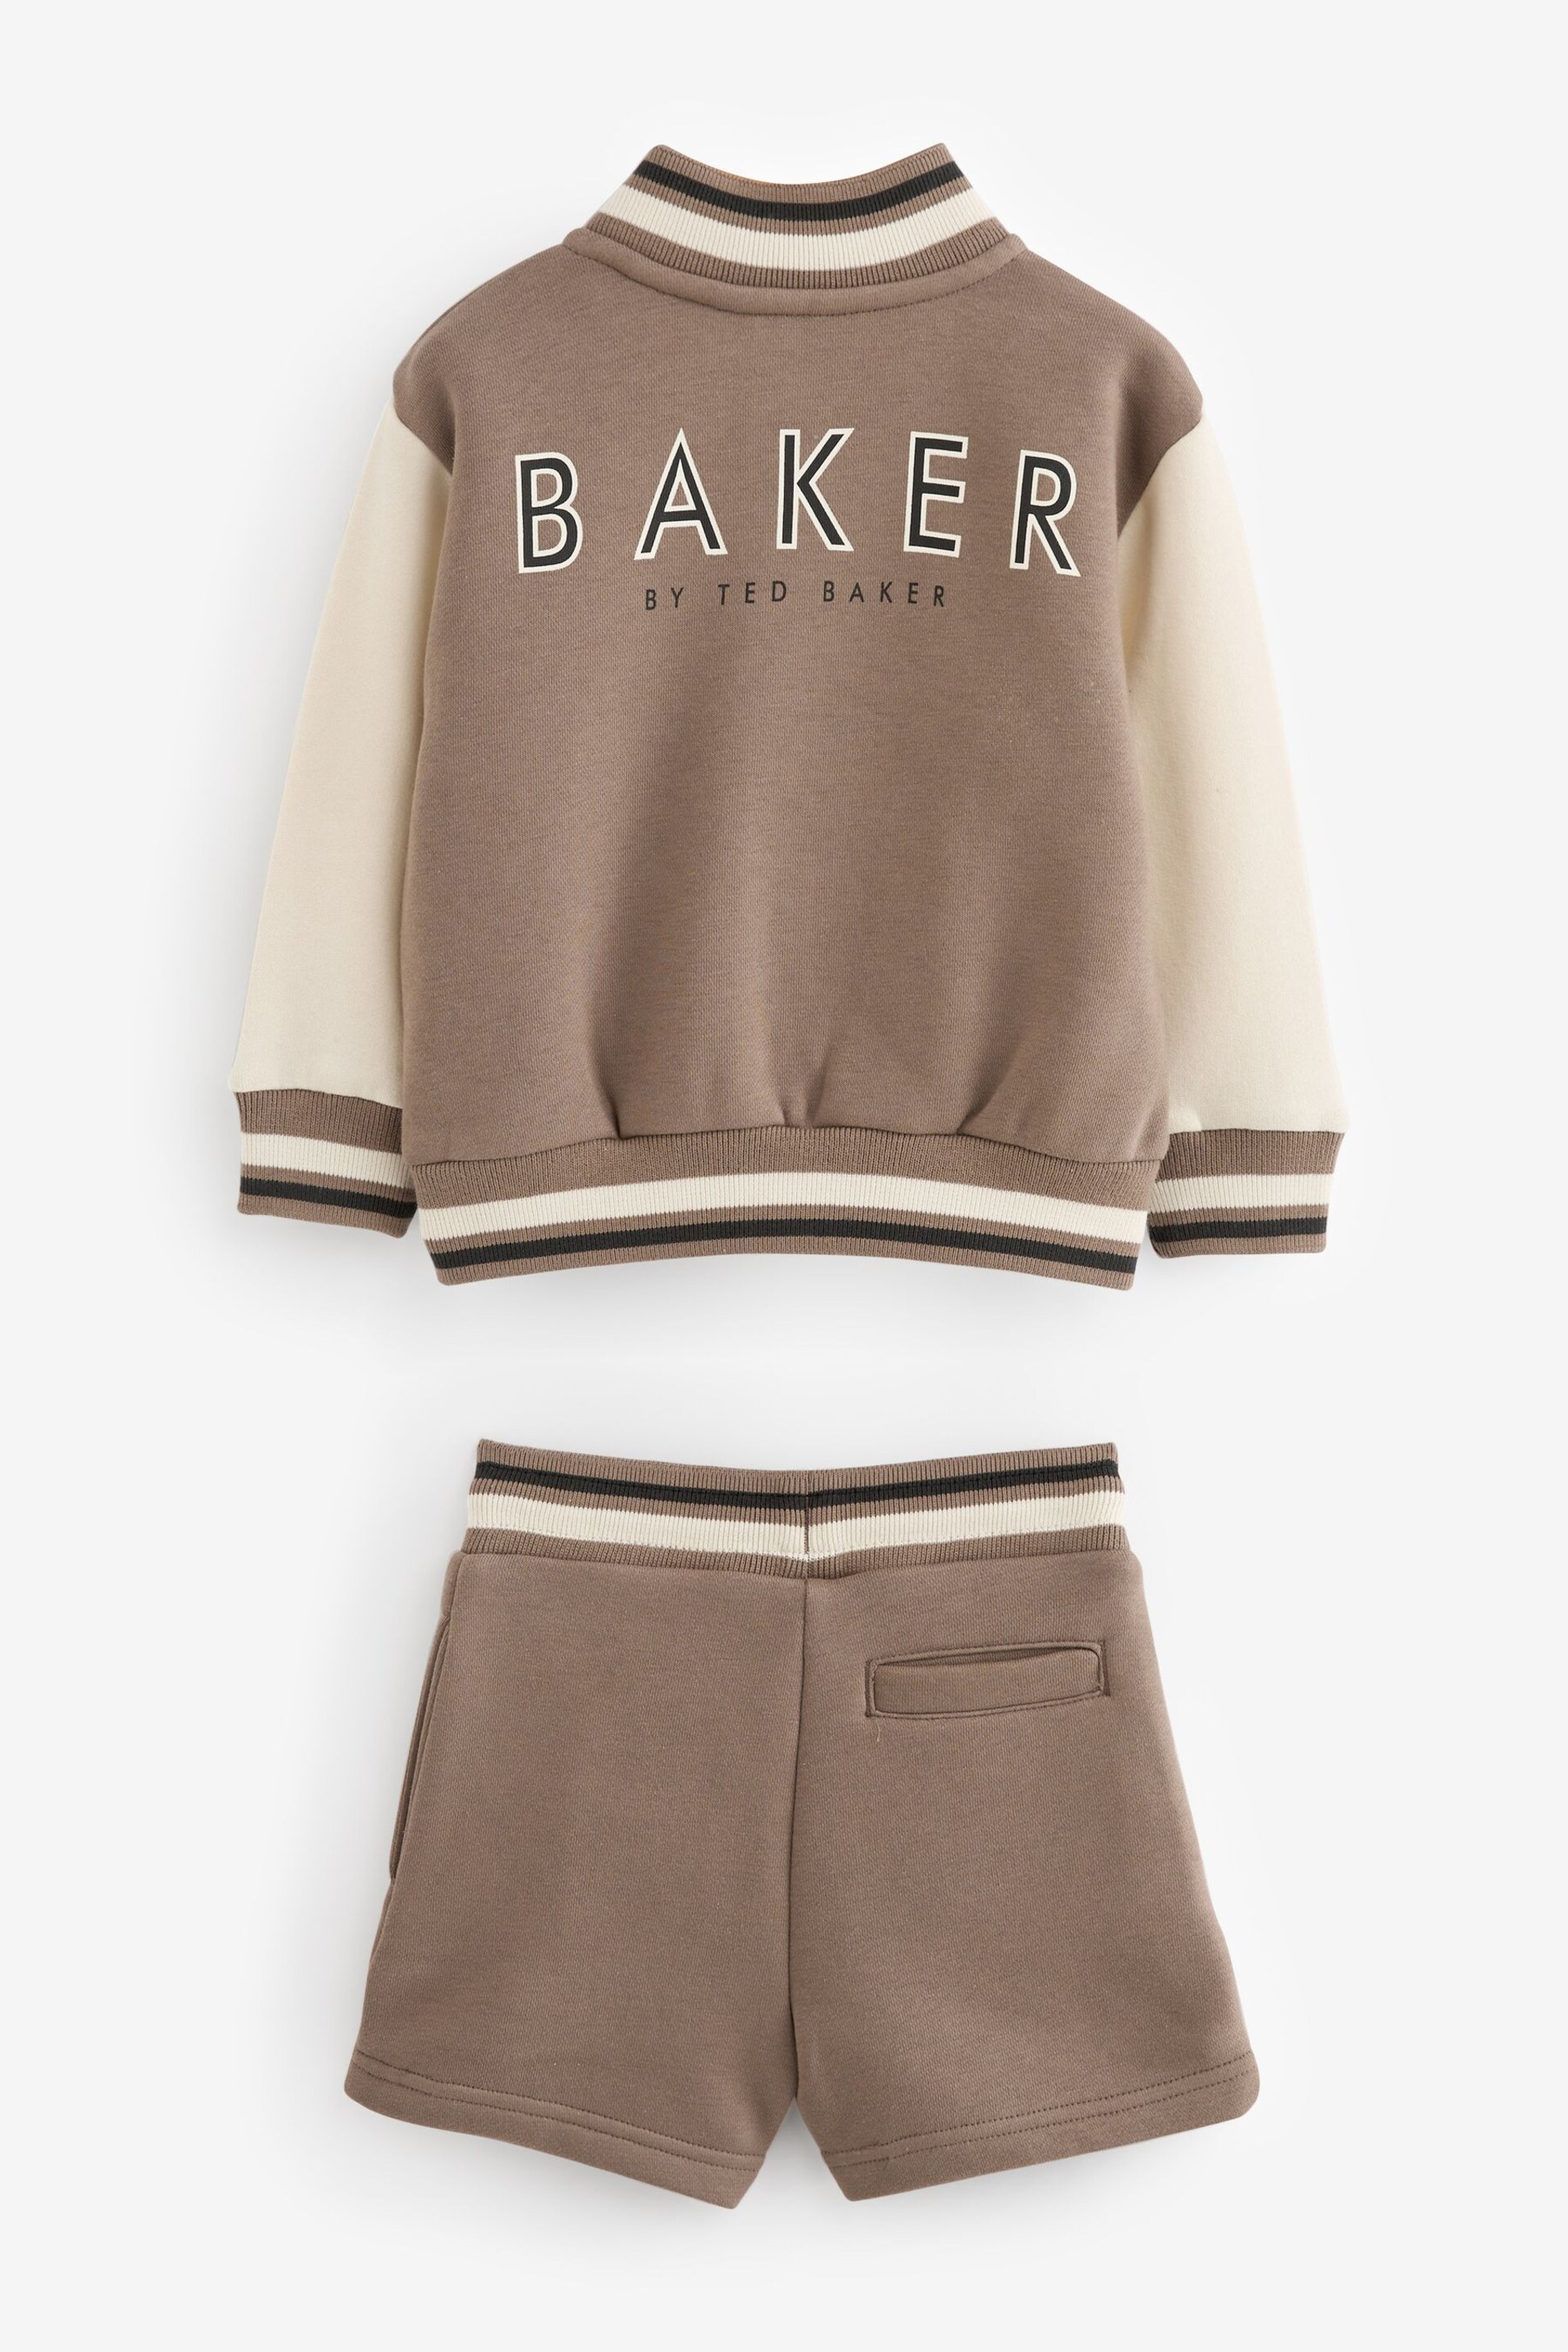 Baker by Ted Baker Varsity Jacket, T-Shirt and Short Set - Image 9 of 16